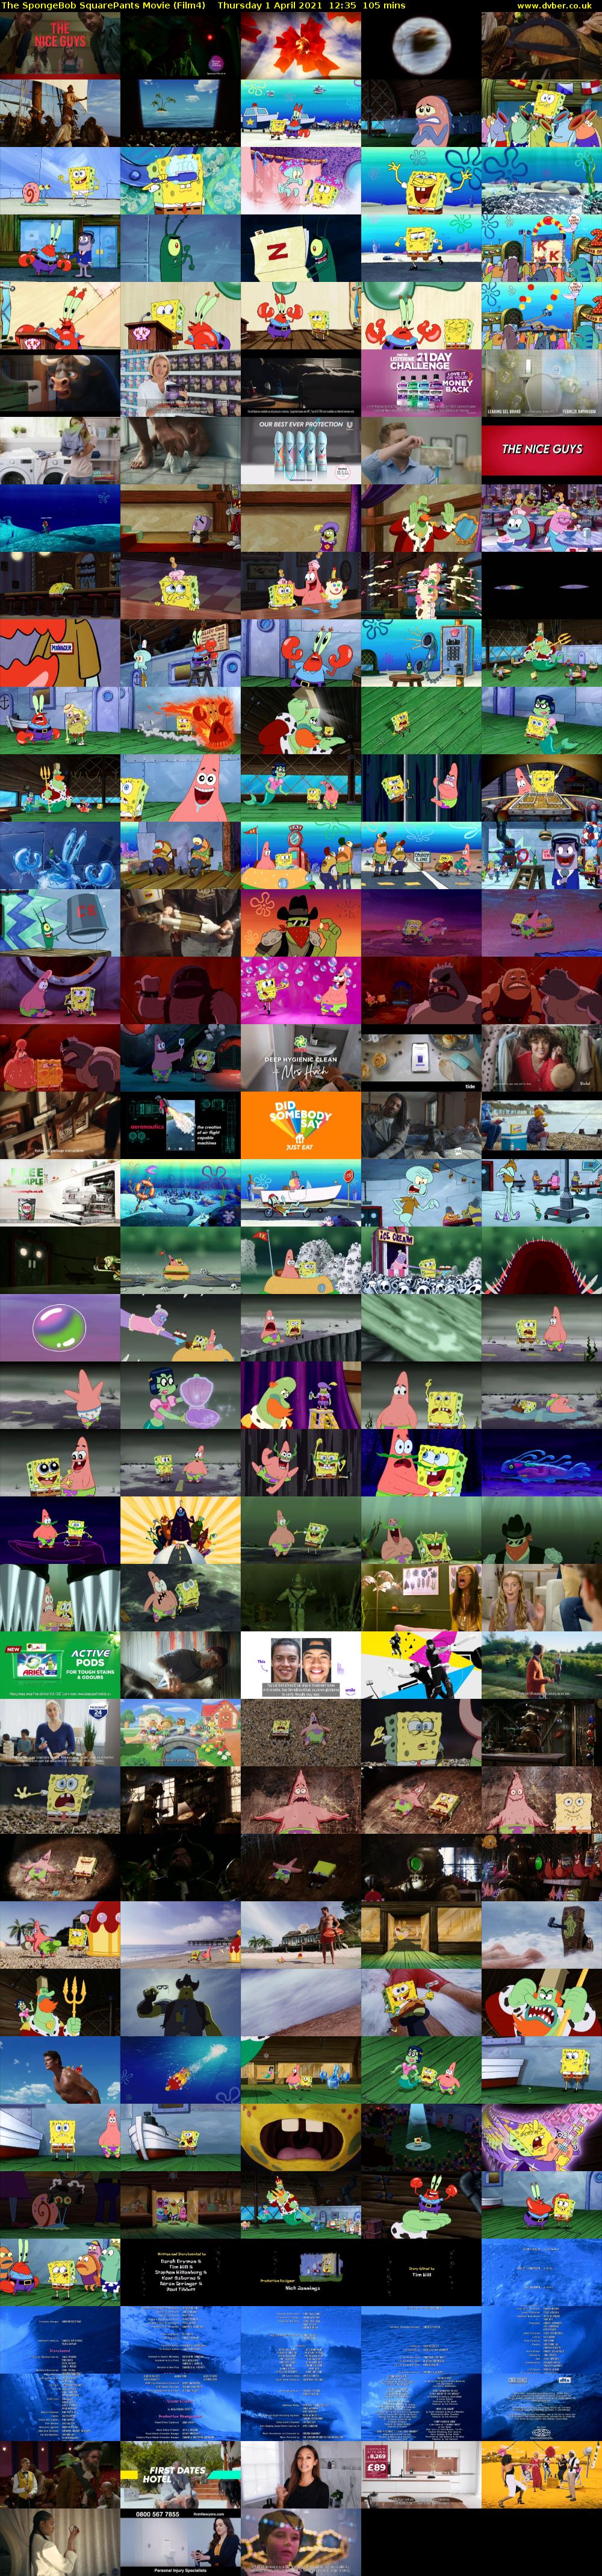 The SpongeBob SquarePants Movie (Film4) Thursday 1 April 2021 12:35 - 14:20